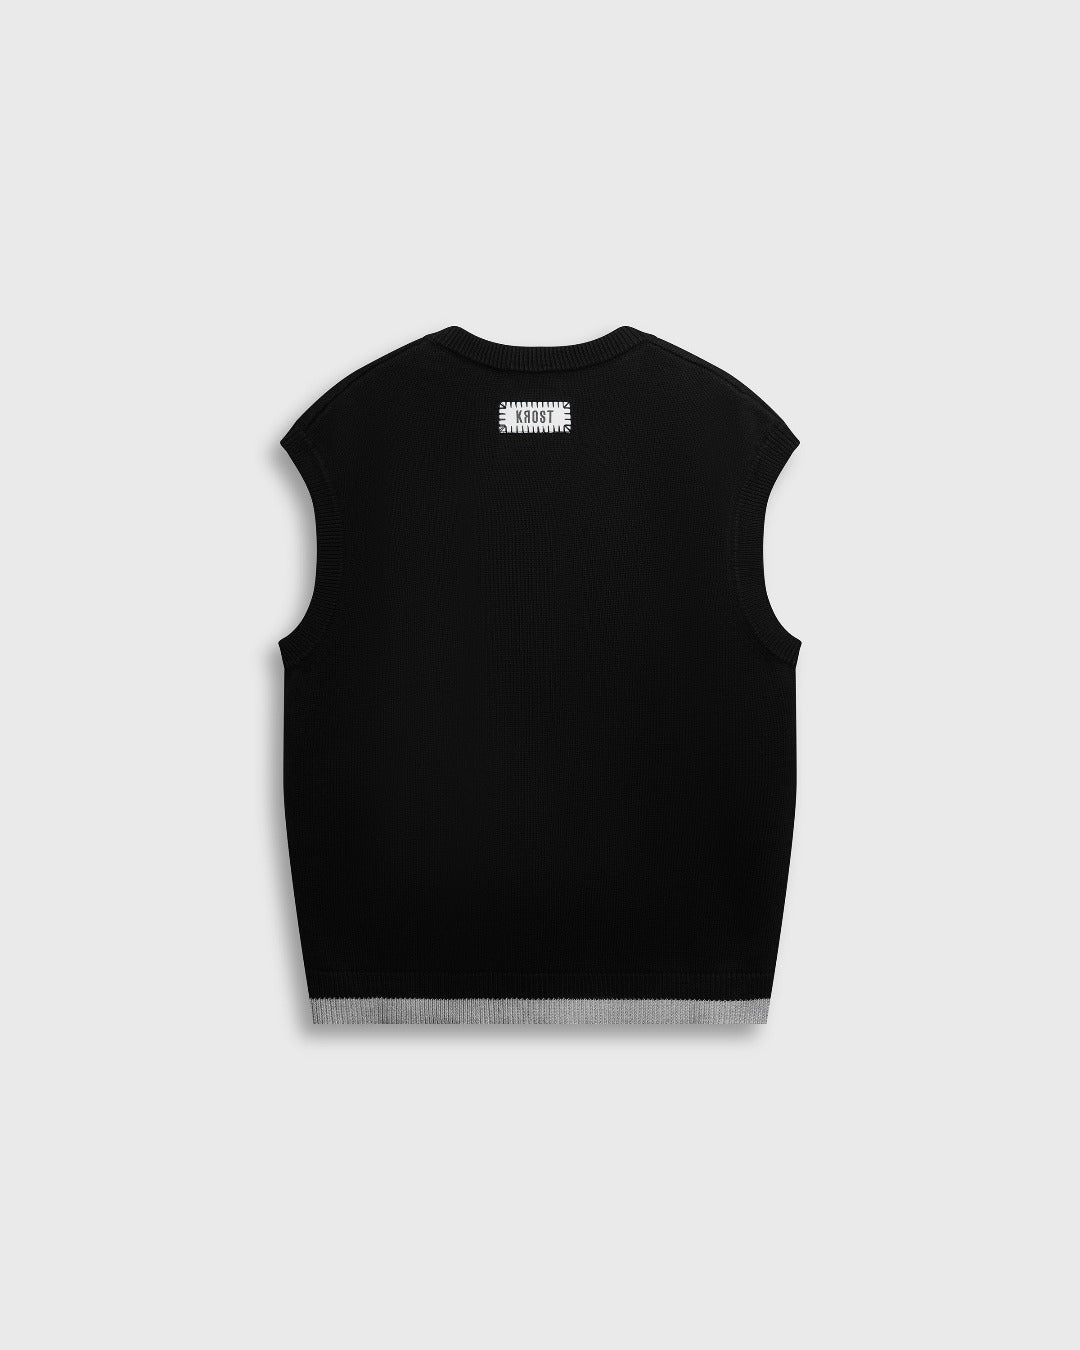 black sleeveless pullover v neck sweater vest by Krost NYC